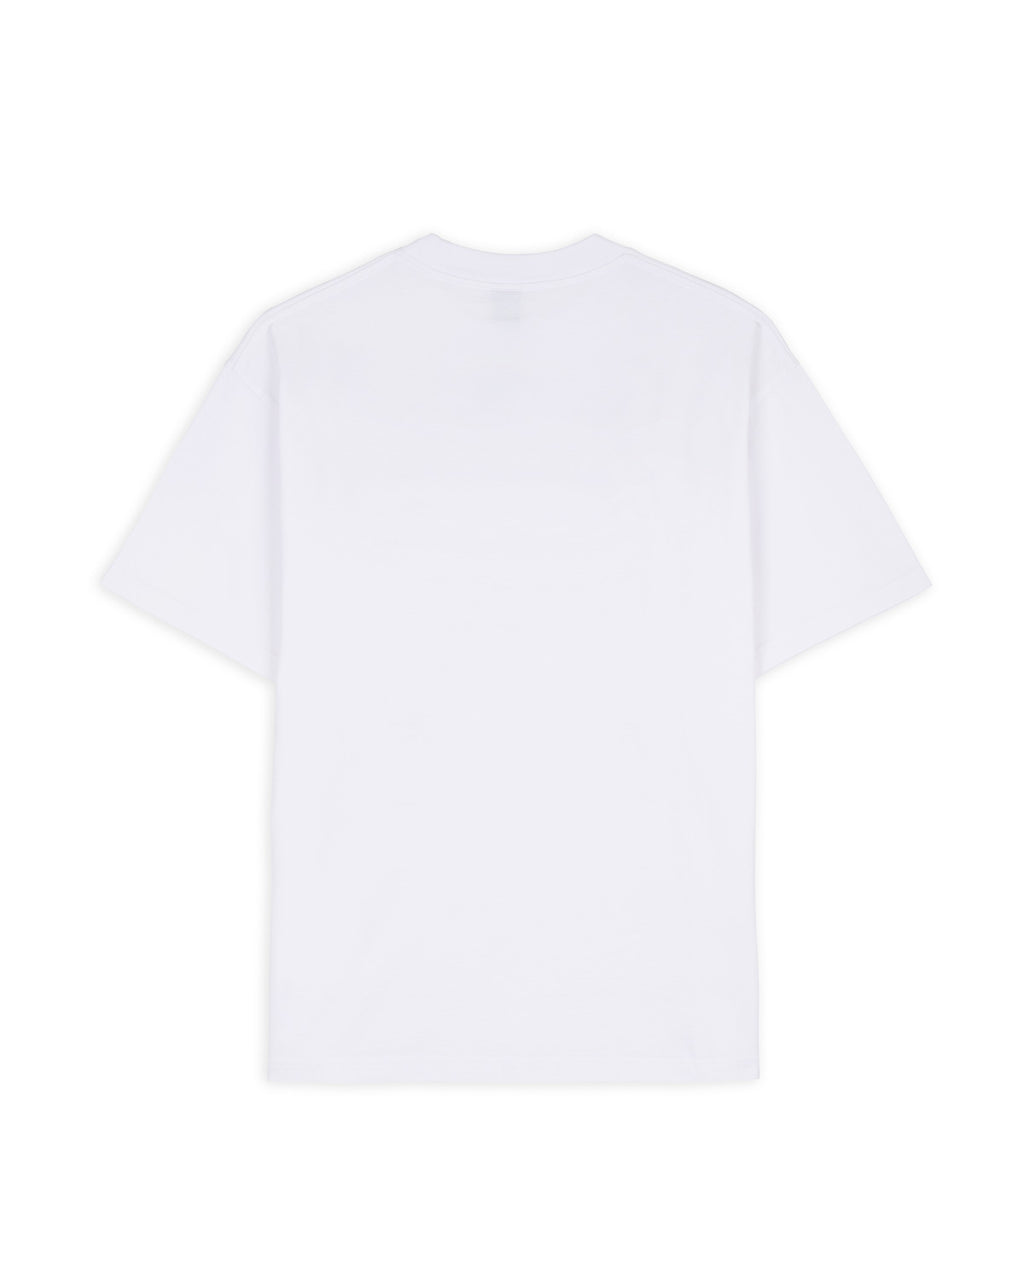 Progressive Artistry T-shirt - White – Brain Dead